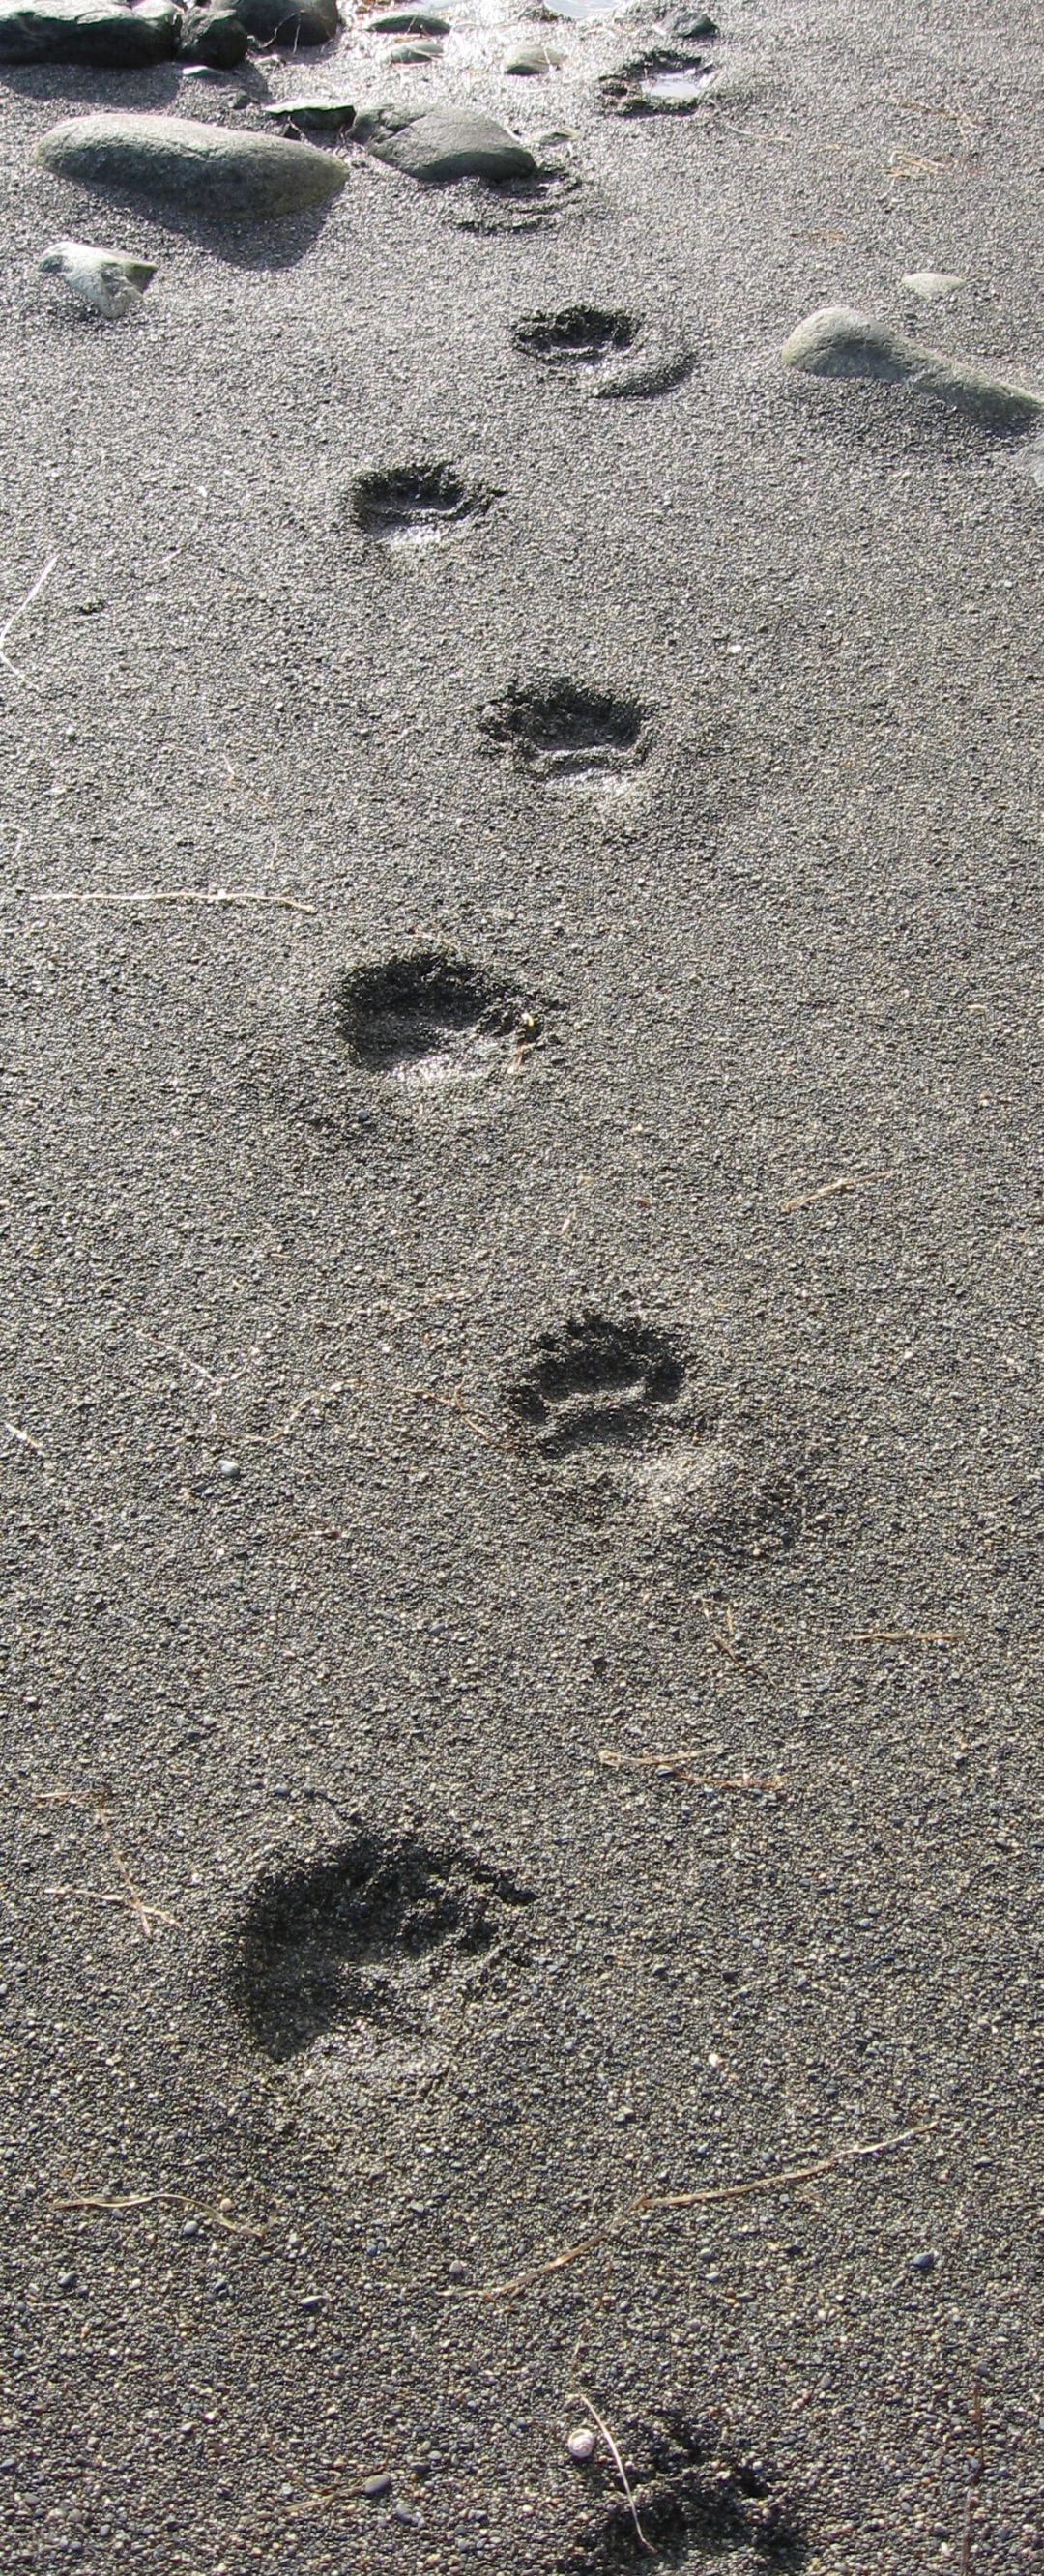 Black Bear Tracks in Sand